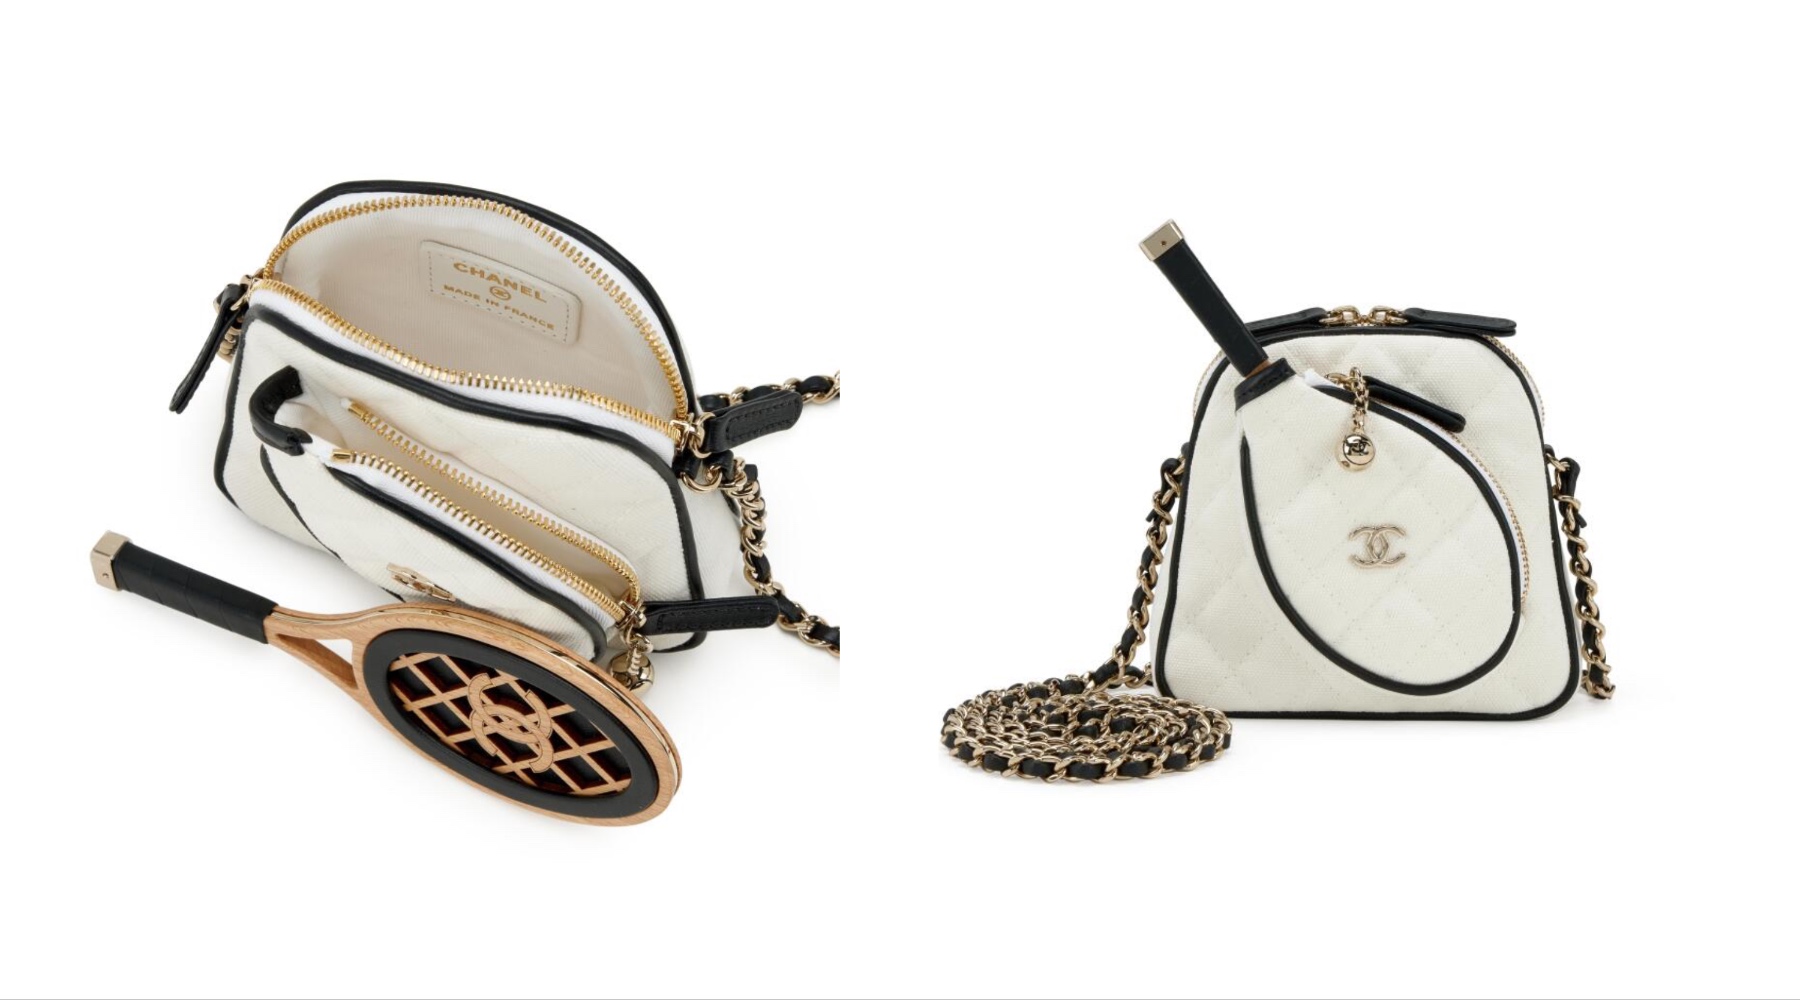 Wishlist: Chanel torba sa ogledalcem u obliku teniskog reketa